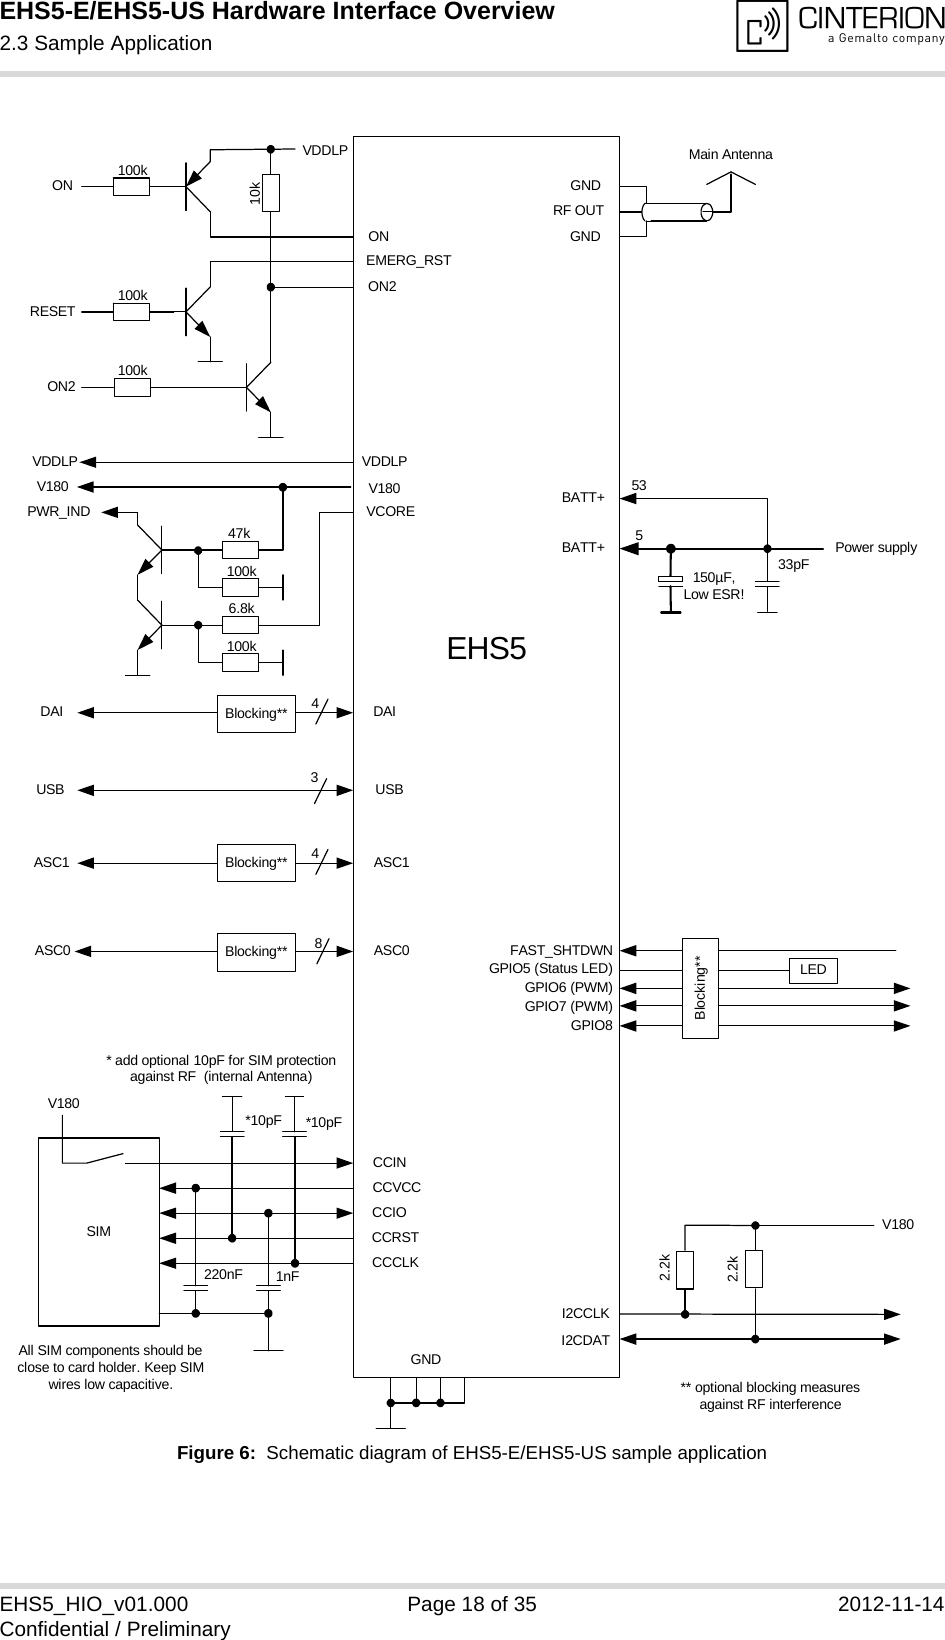 EHS5-E/EHS5-US Hardware Interface Overview2.3 Sample Application18EHS5_HIO_v01.000 Page 18 of 35 2012-11-14Confidential / PreliminaryFigure 6:  Schematic diagram of EHS5-E/EHS5-US sample applicationONEMERG_RSTVCOREV180ONRESETASC0ASC1ASC1ASC0 84V180CCVCCCCIOCCCLKCCINCCRSTSIMV180220nF 1nFI2CCLKI2CDAT2.2kV180FAST_SHTDWN GPIO5 (Status LED)GPIO6 (PWM)GPIO7 (PWM)GPIO8 LEDGNDGNDGNDRF OUTBATT+Power supplyMain AntennaEHS5All SIM components should be close to card holder. Keep SIM wires low capacitive.*10pF *10pF* add optional 10pF for SIM protection against RF  (internal Antenna)150µF,Low ESR!33pFBlocking**Blocking**3USBUSBBlocking**VDDLPVDDLPPWR_INDON2ON2BATT+535DAIDAI 4Blocking**VDDLP100k100k100k100k6.8k100k47k10k2.2k** optional blocking measuresagainst RF interference